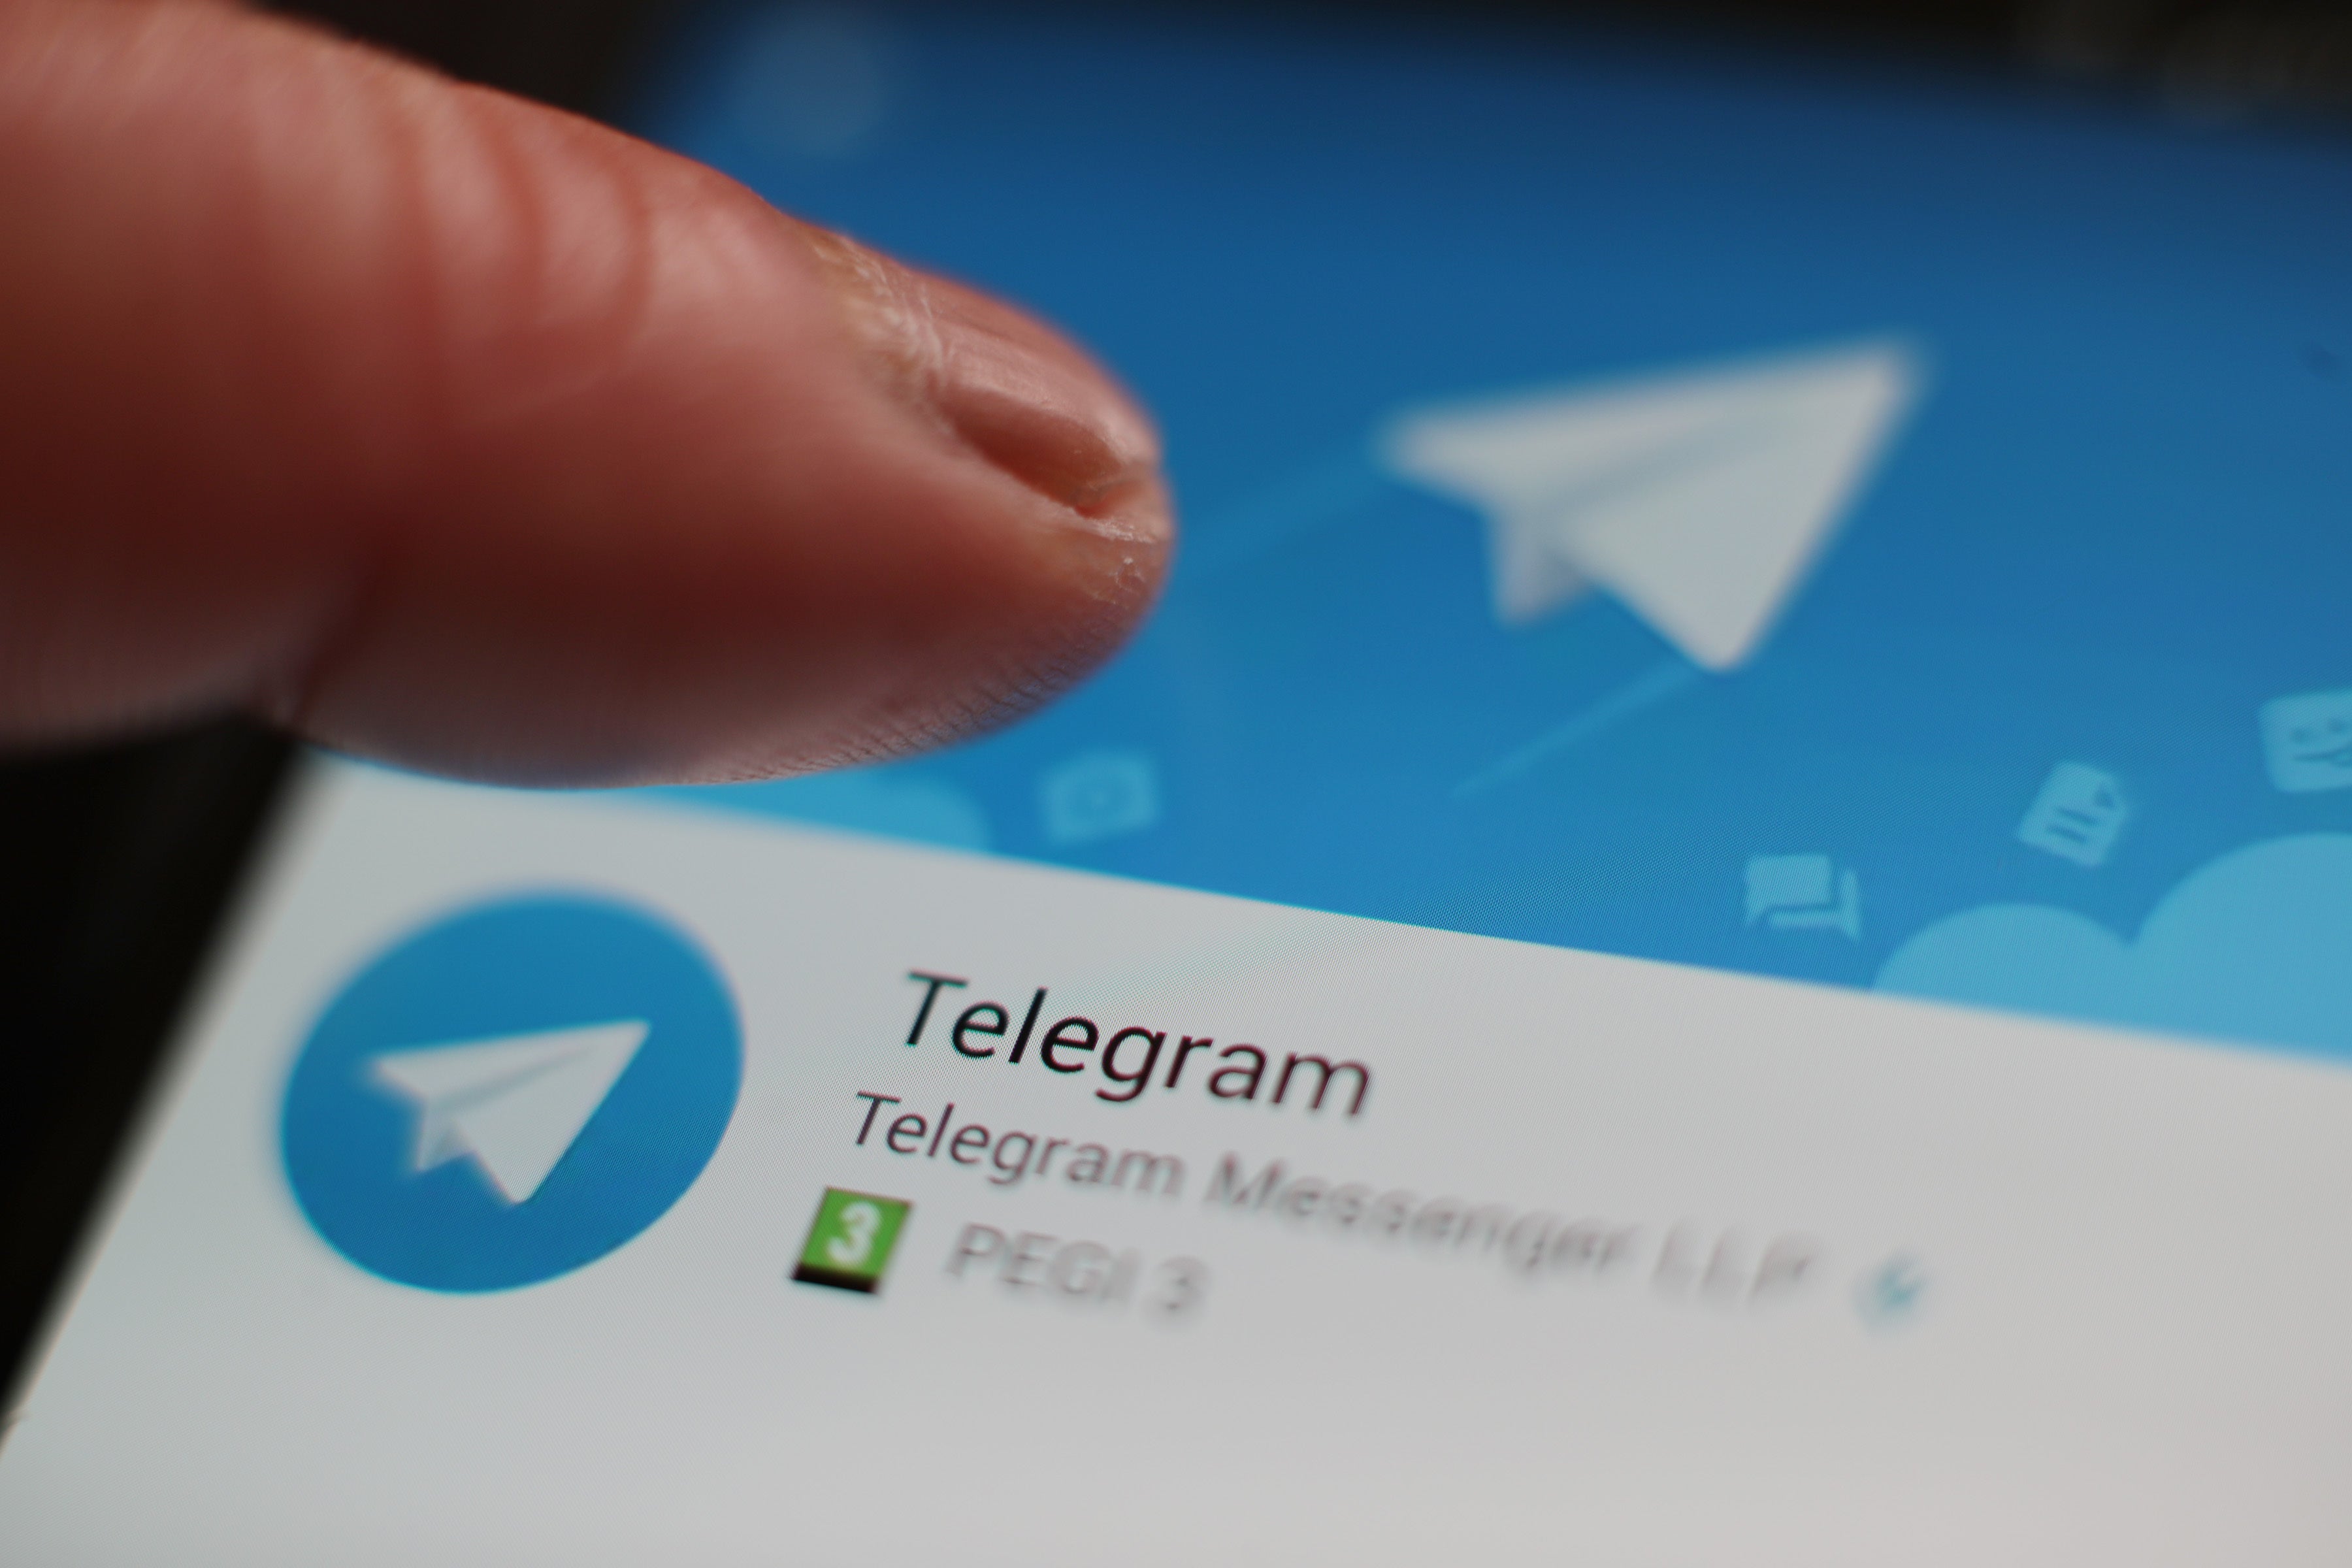 Слабой телеграмм. Телеграм. Телеграм в телефоне. Фото для телеграмма. Мессенджер телеграм.